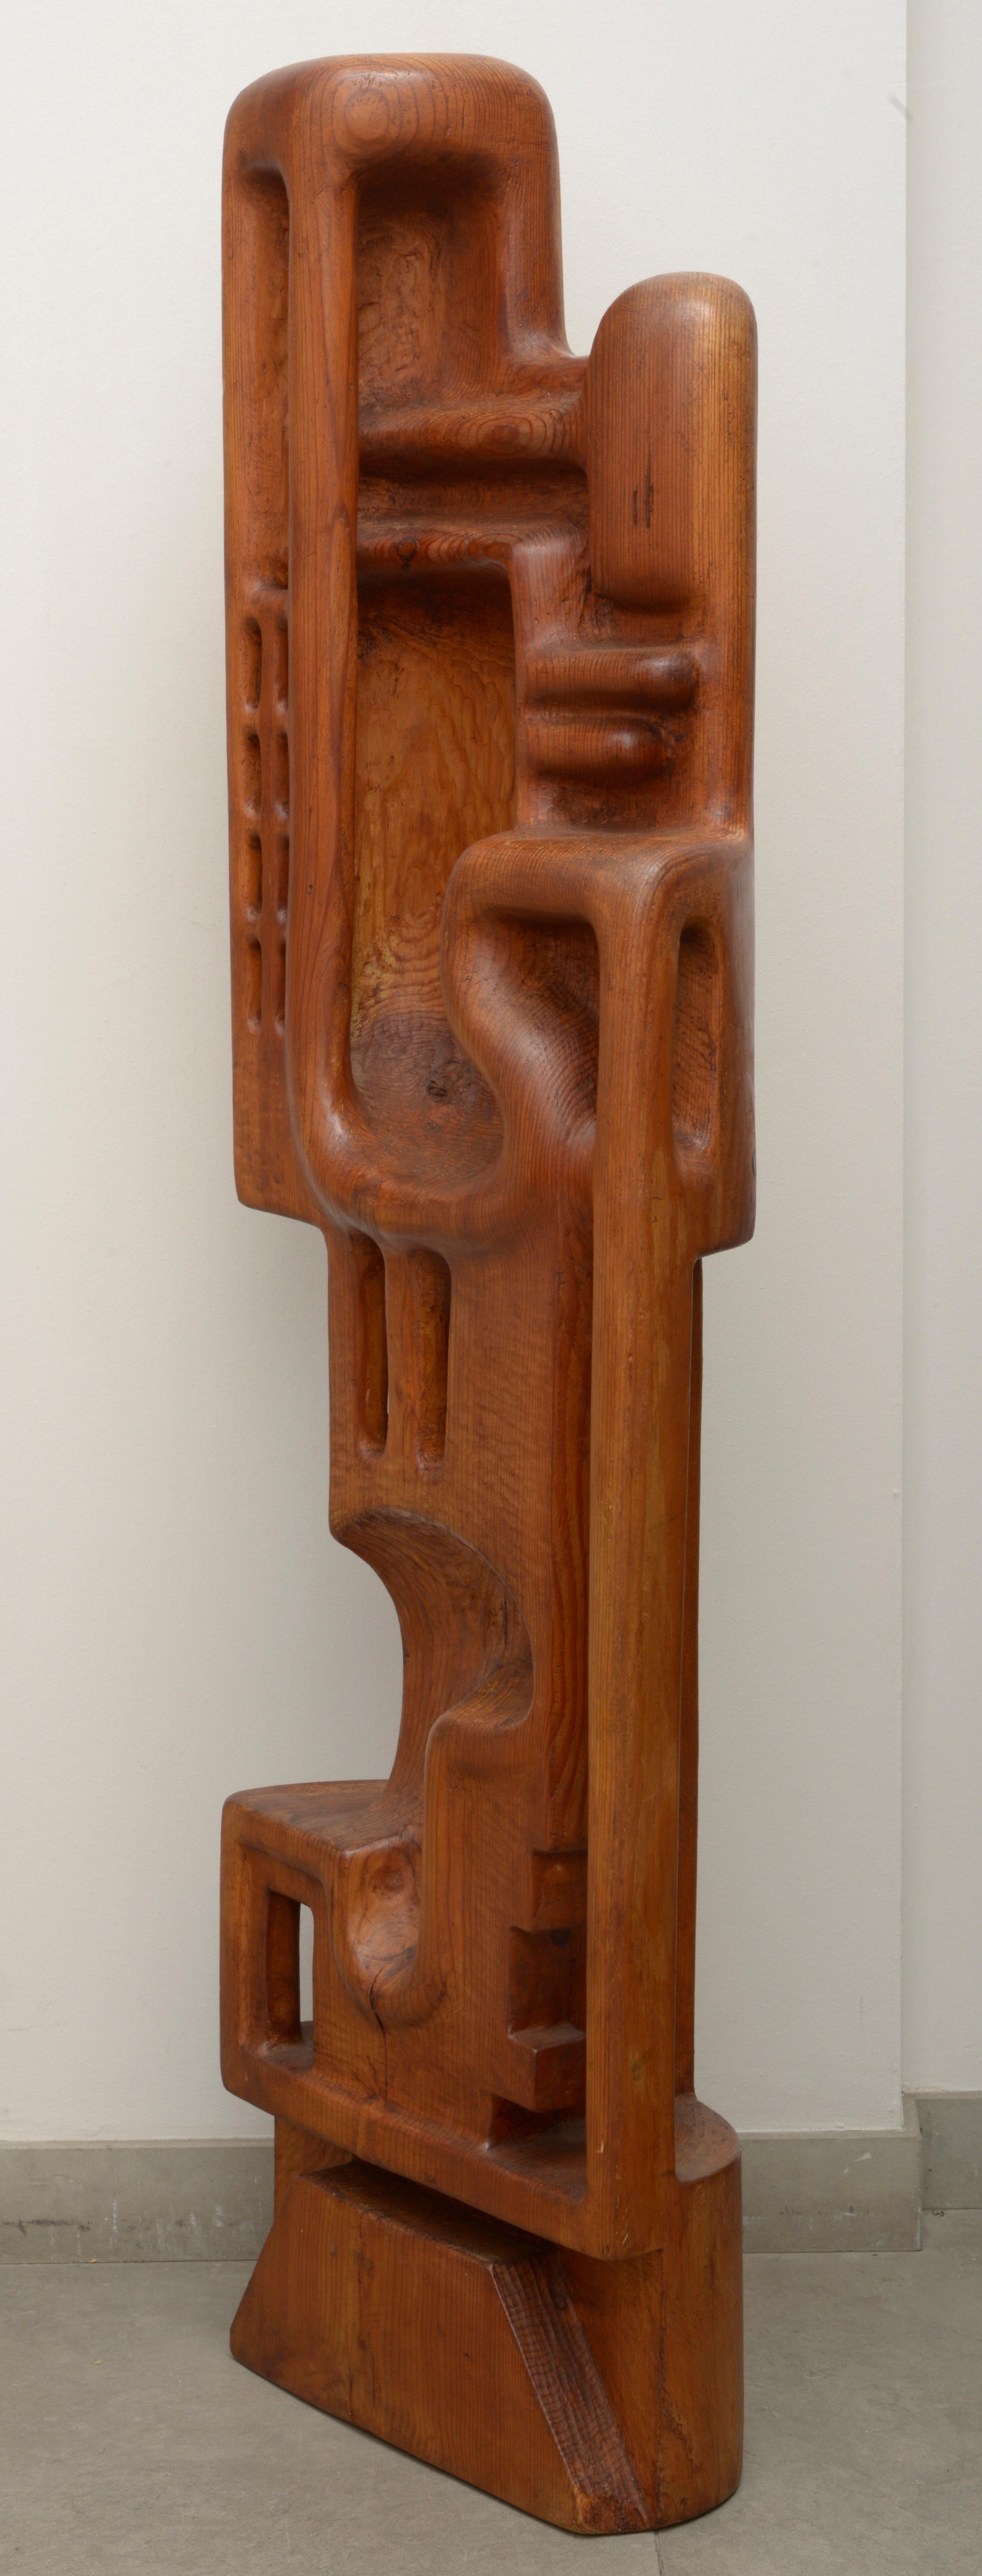 Henryk Burzec abstract solid pitchpin sculpture.